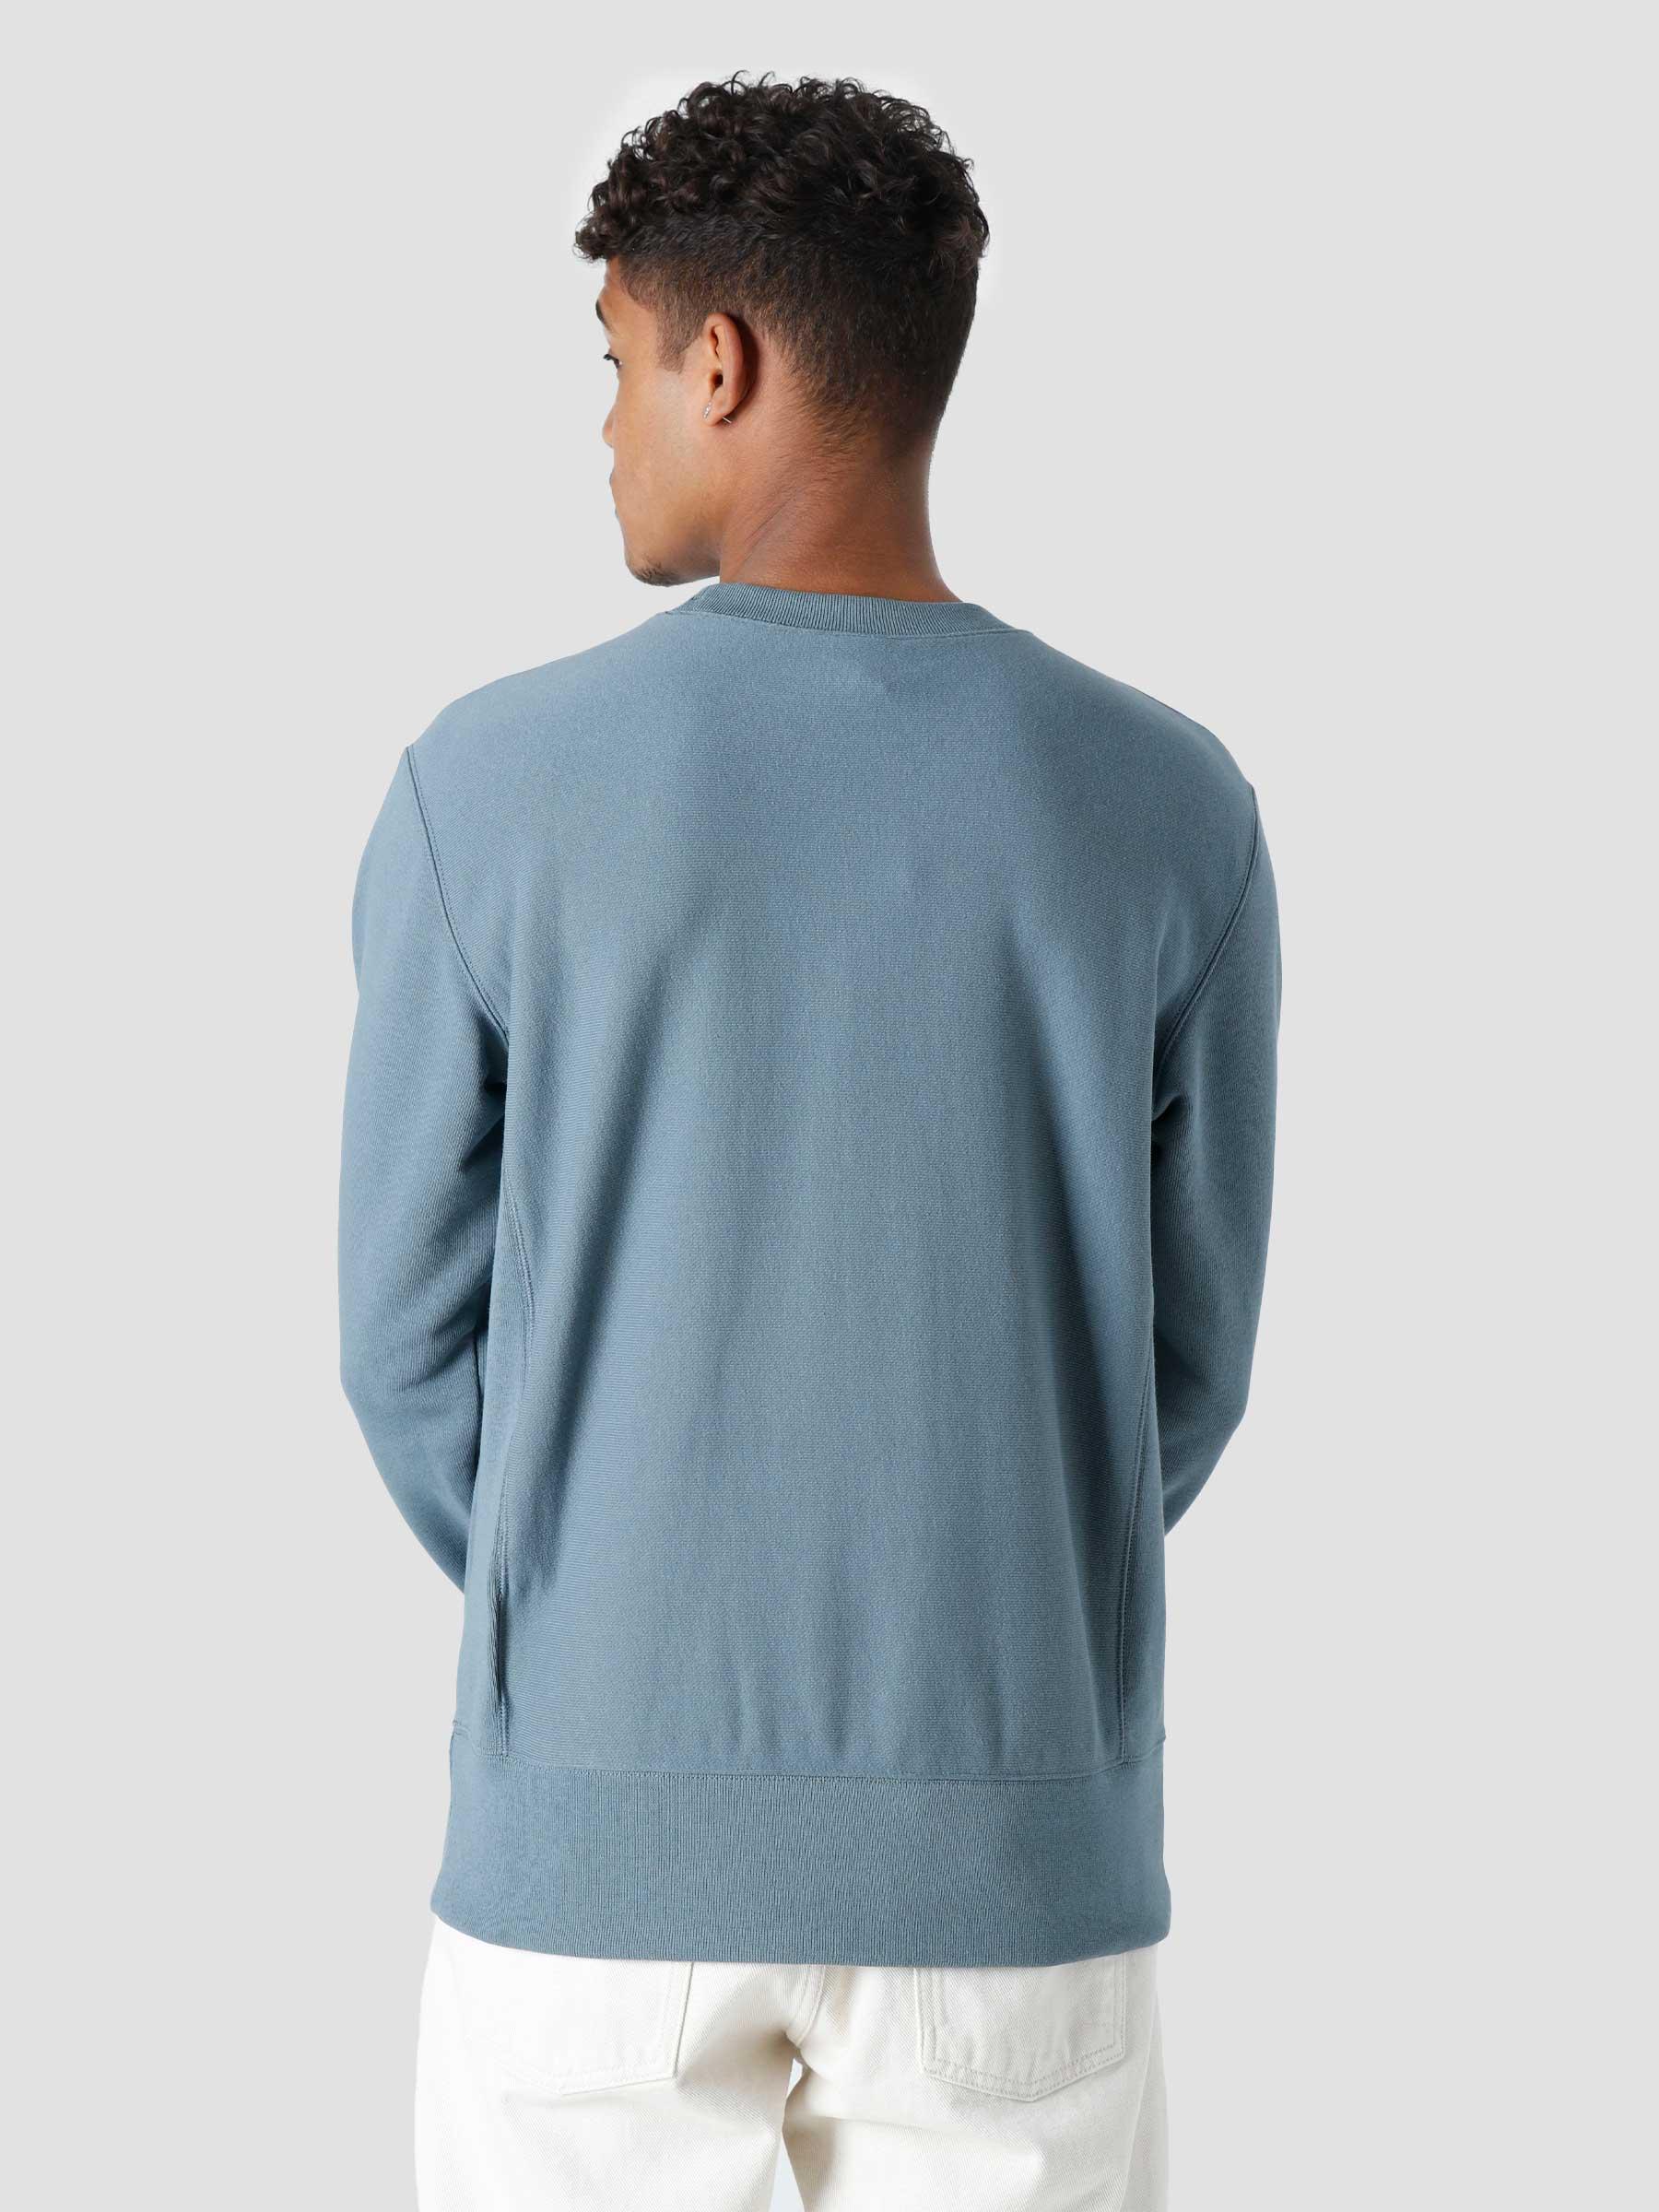 Reverse Weave Soft Microsanded on Backside Crewneck Sweatshirt Grey 217223-ES017